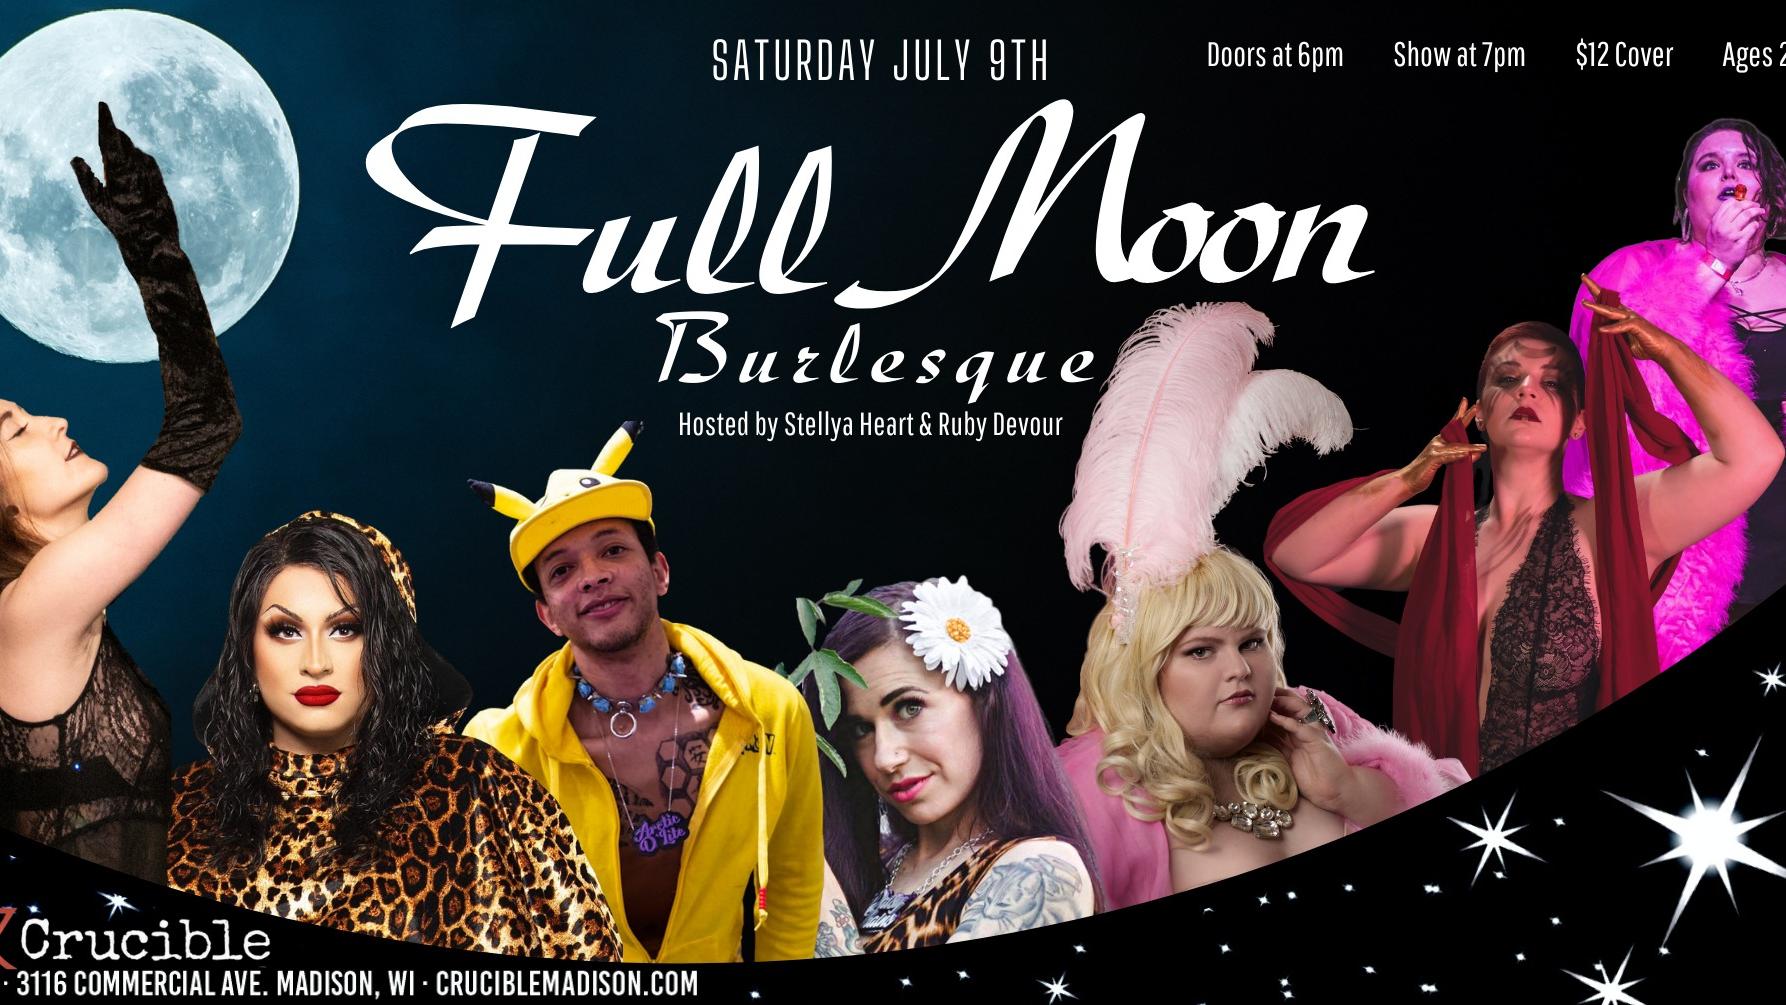 Full moon burlesque